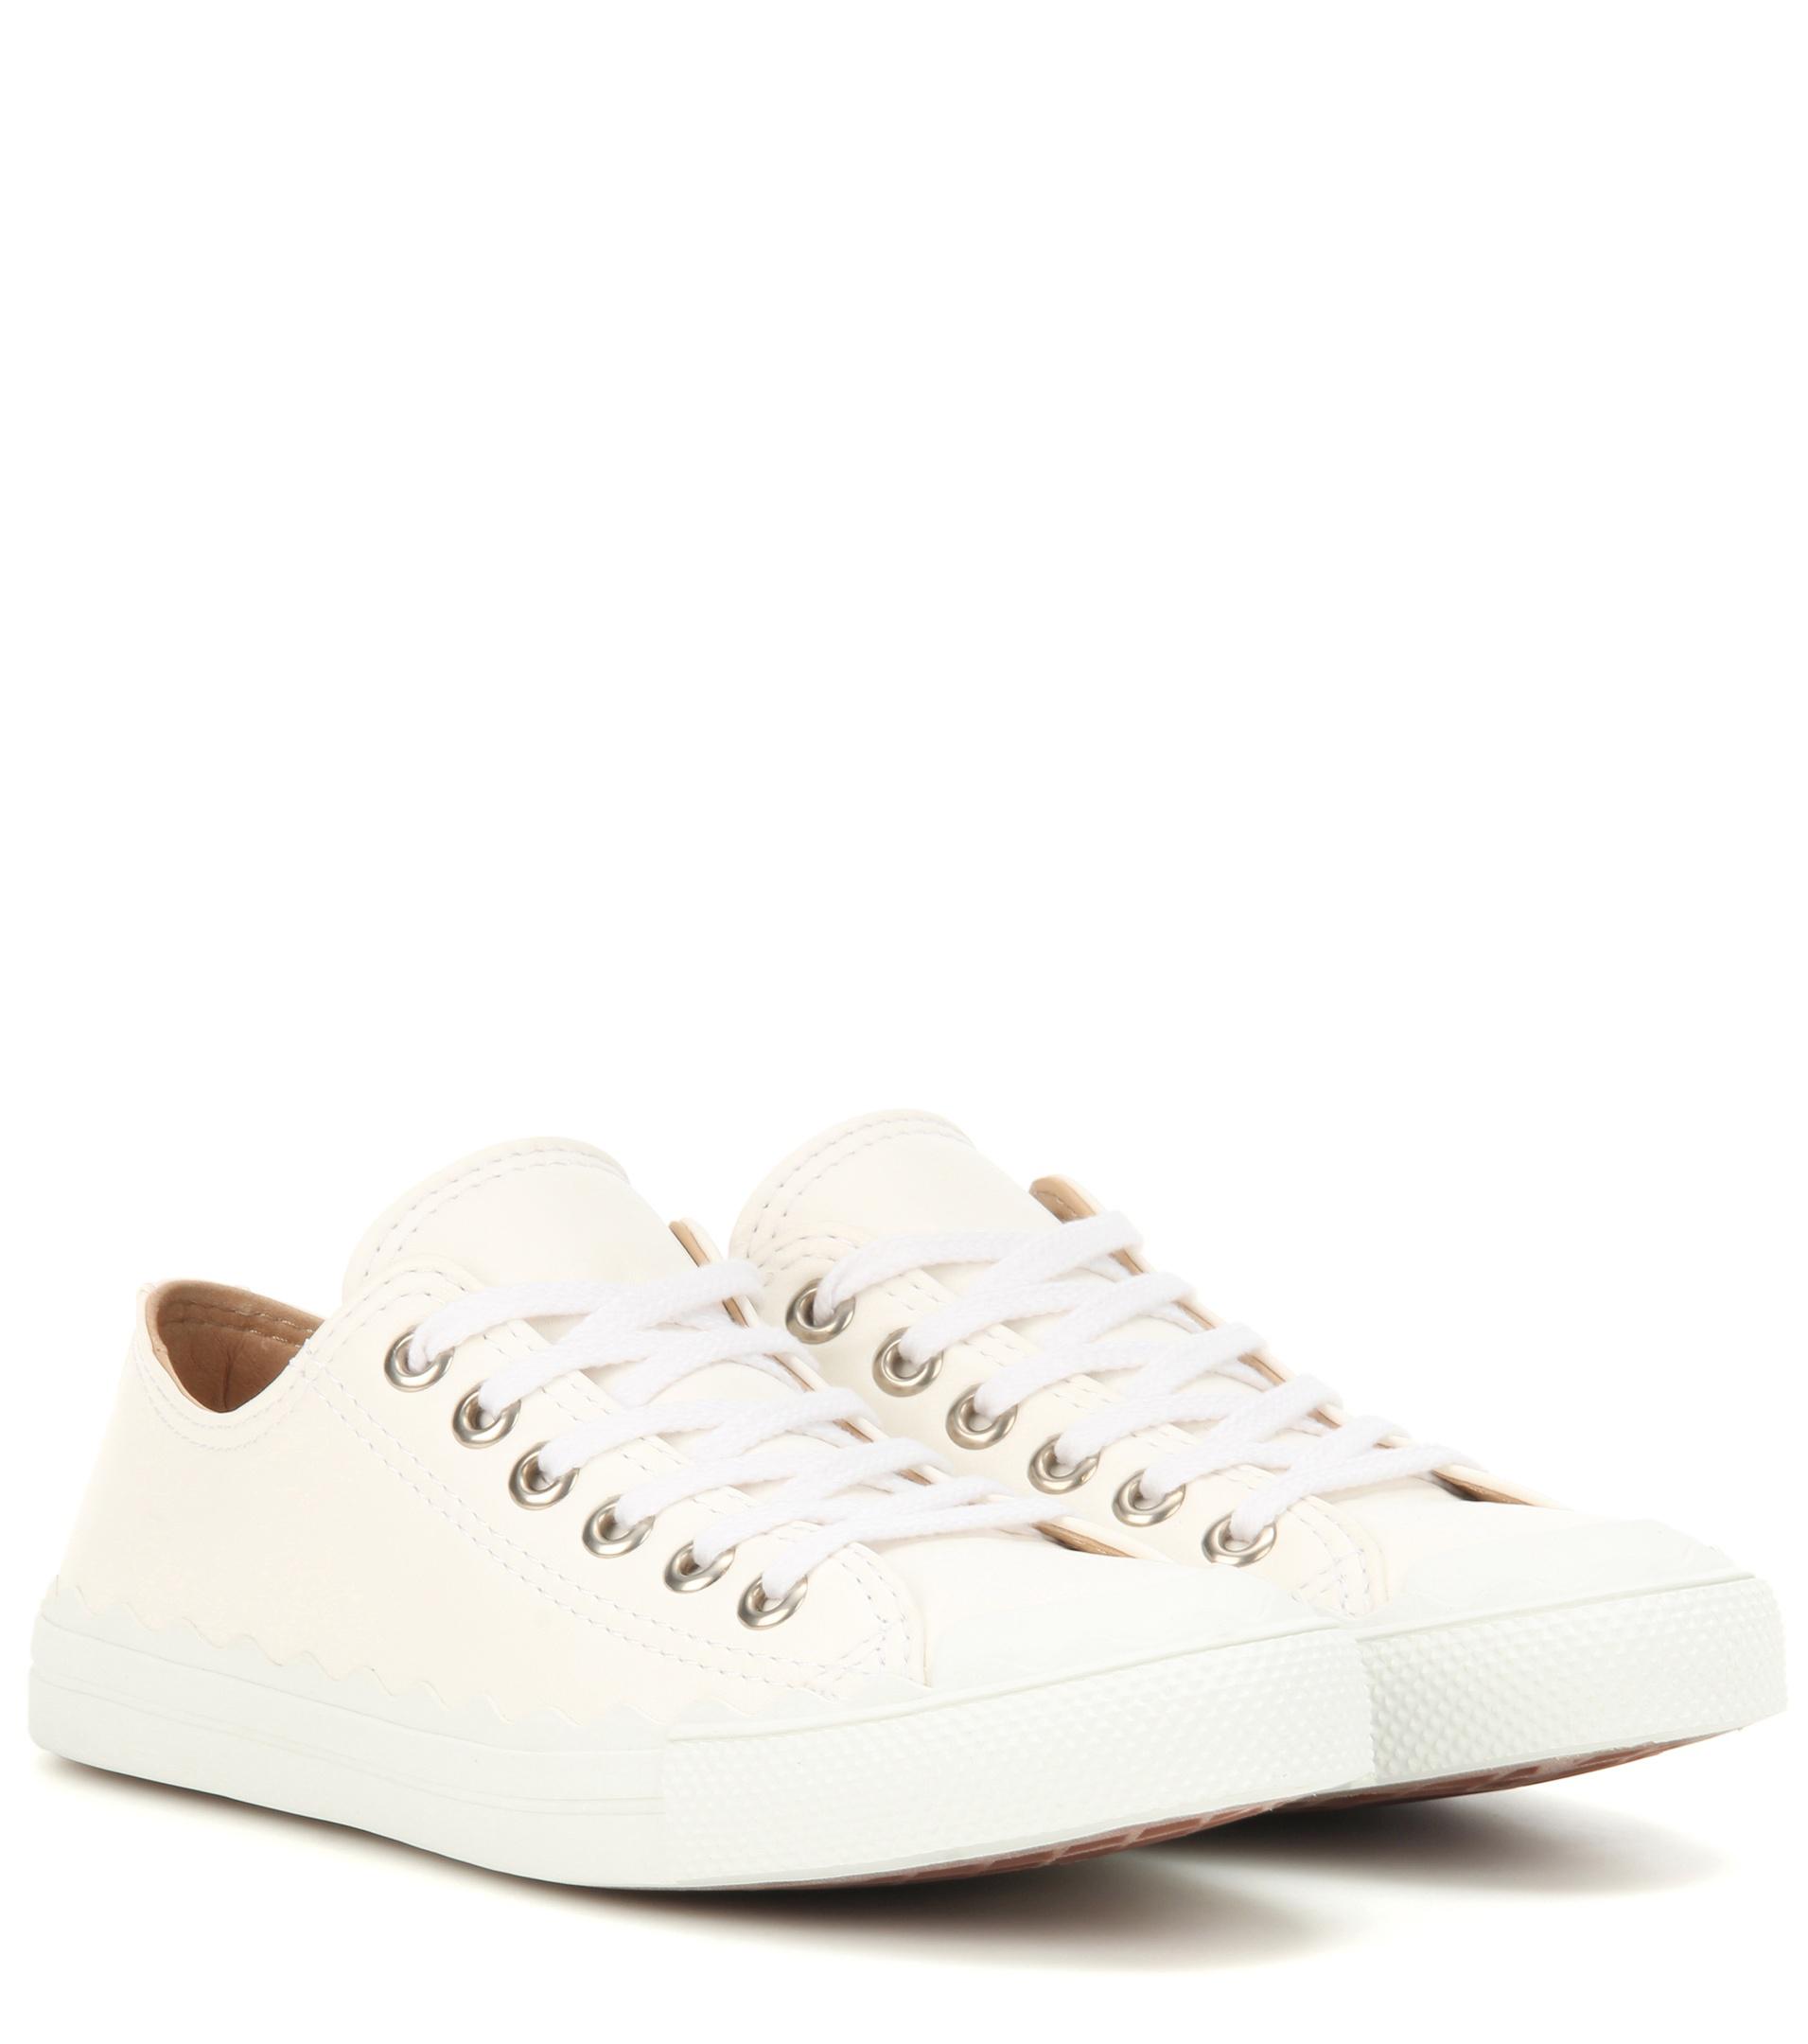 Lyst - Chloé Lauren Leather Sneakers in White